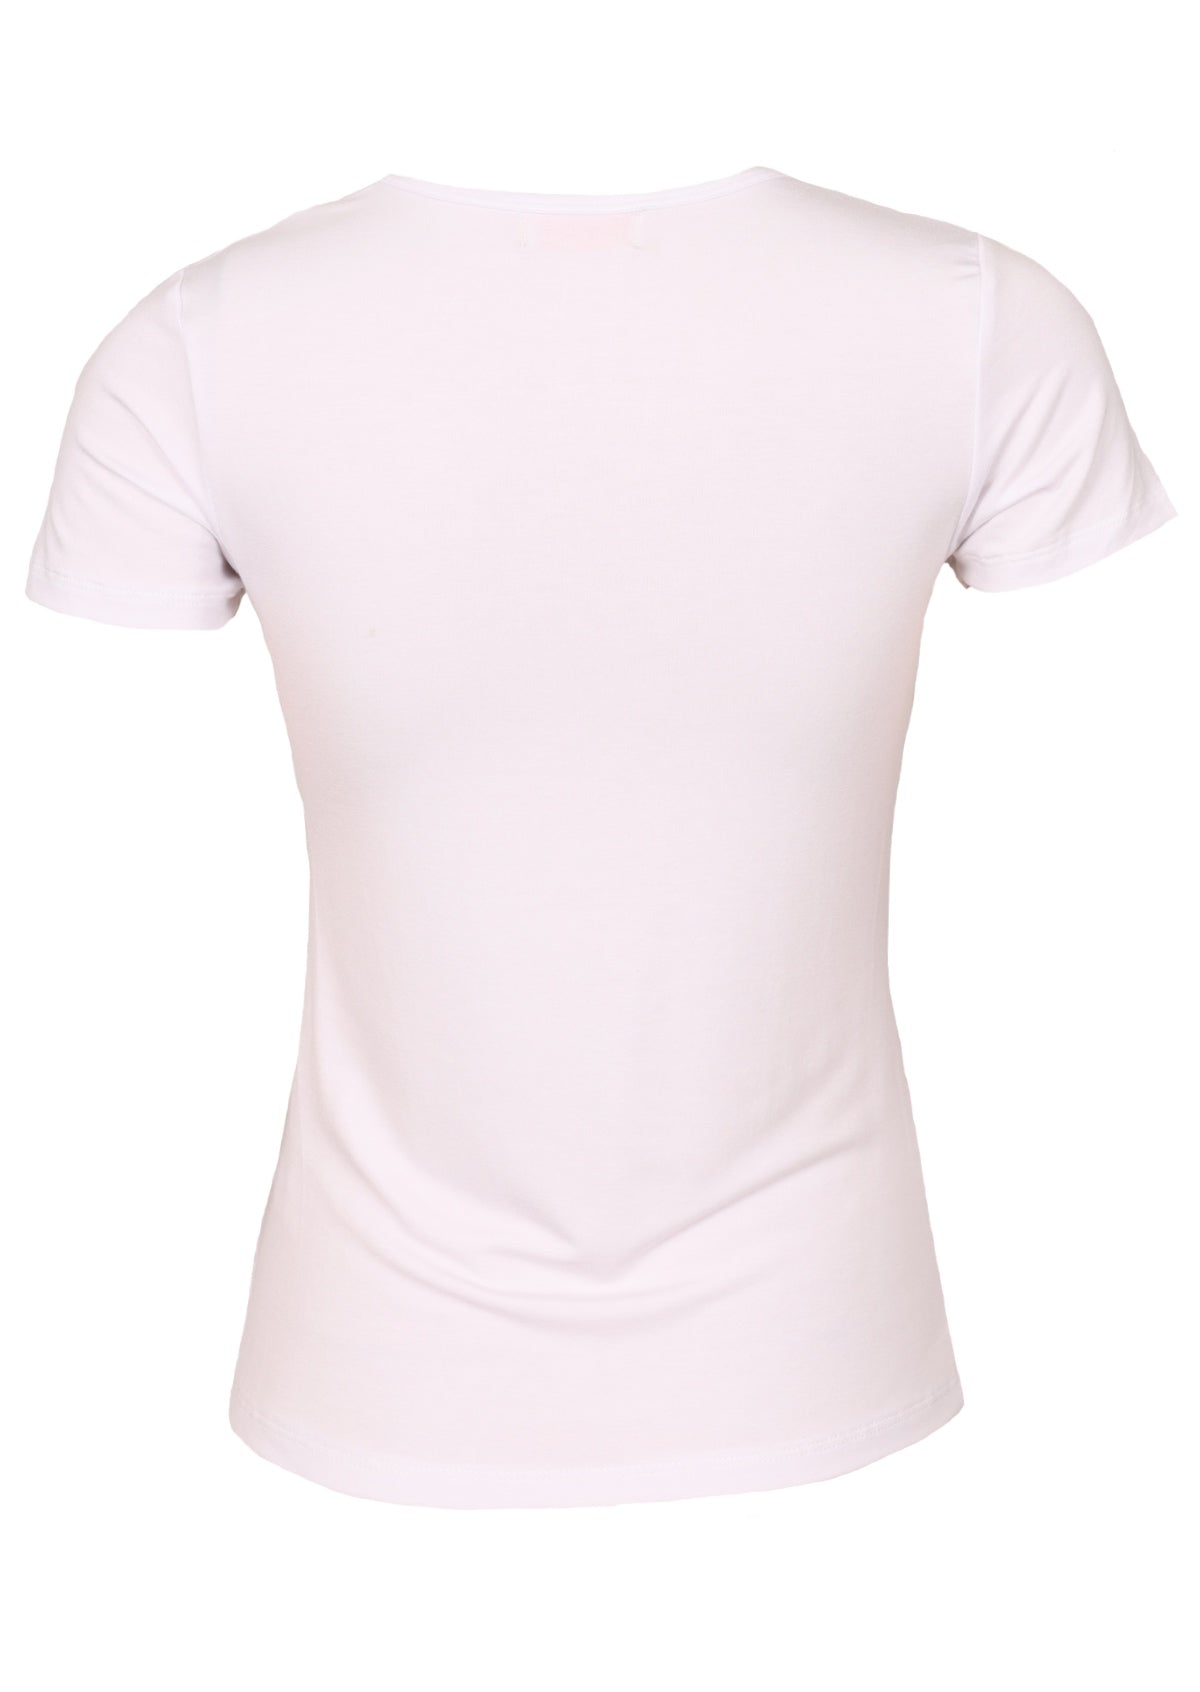 Back view soft stretch rayon white t-shirt.